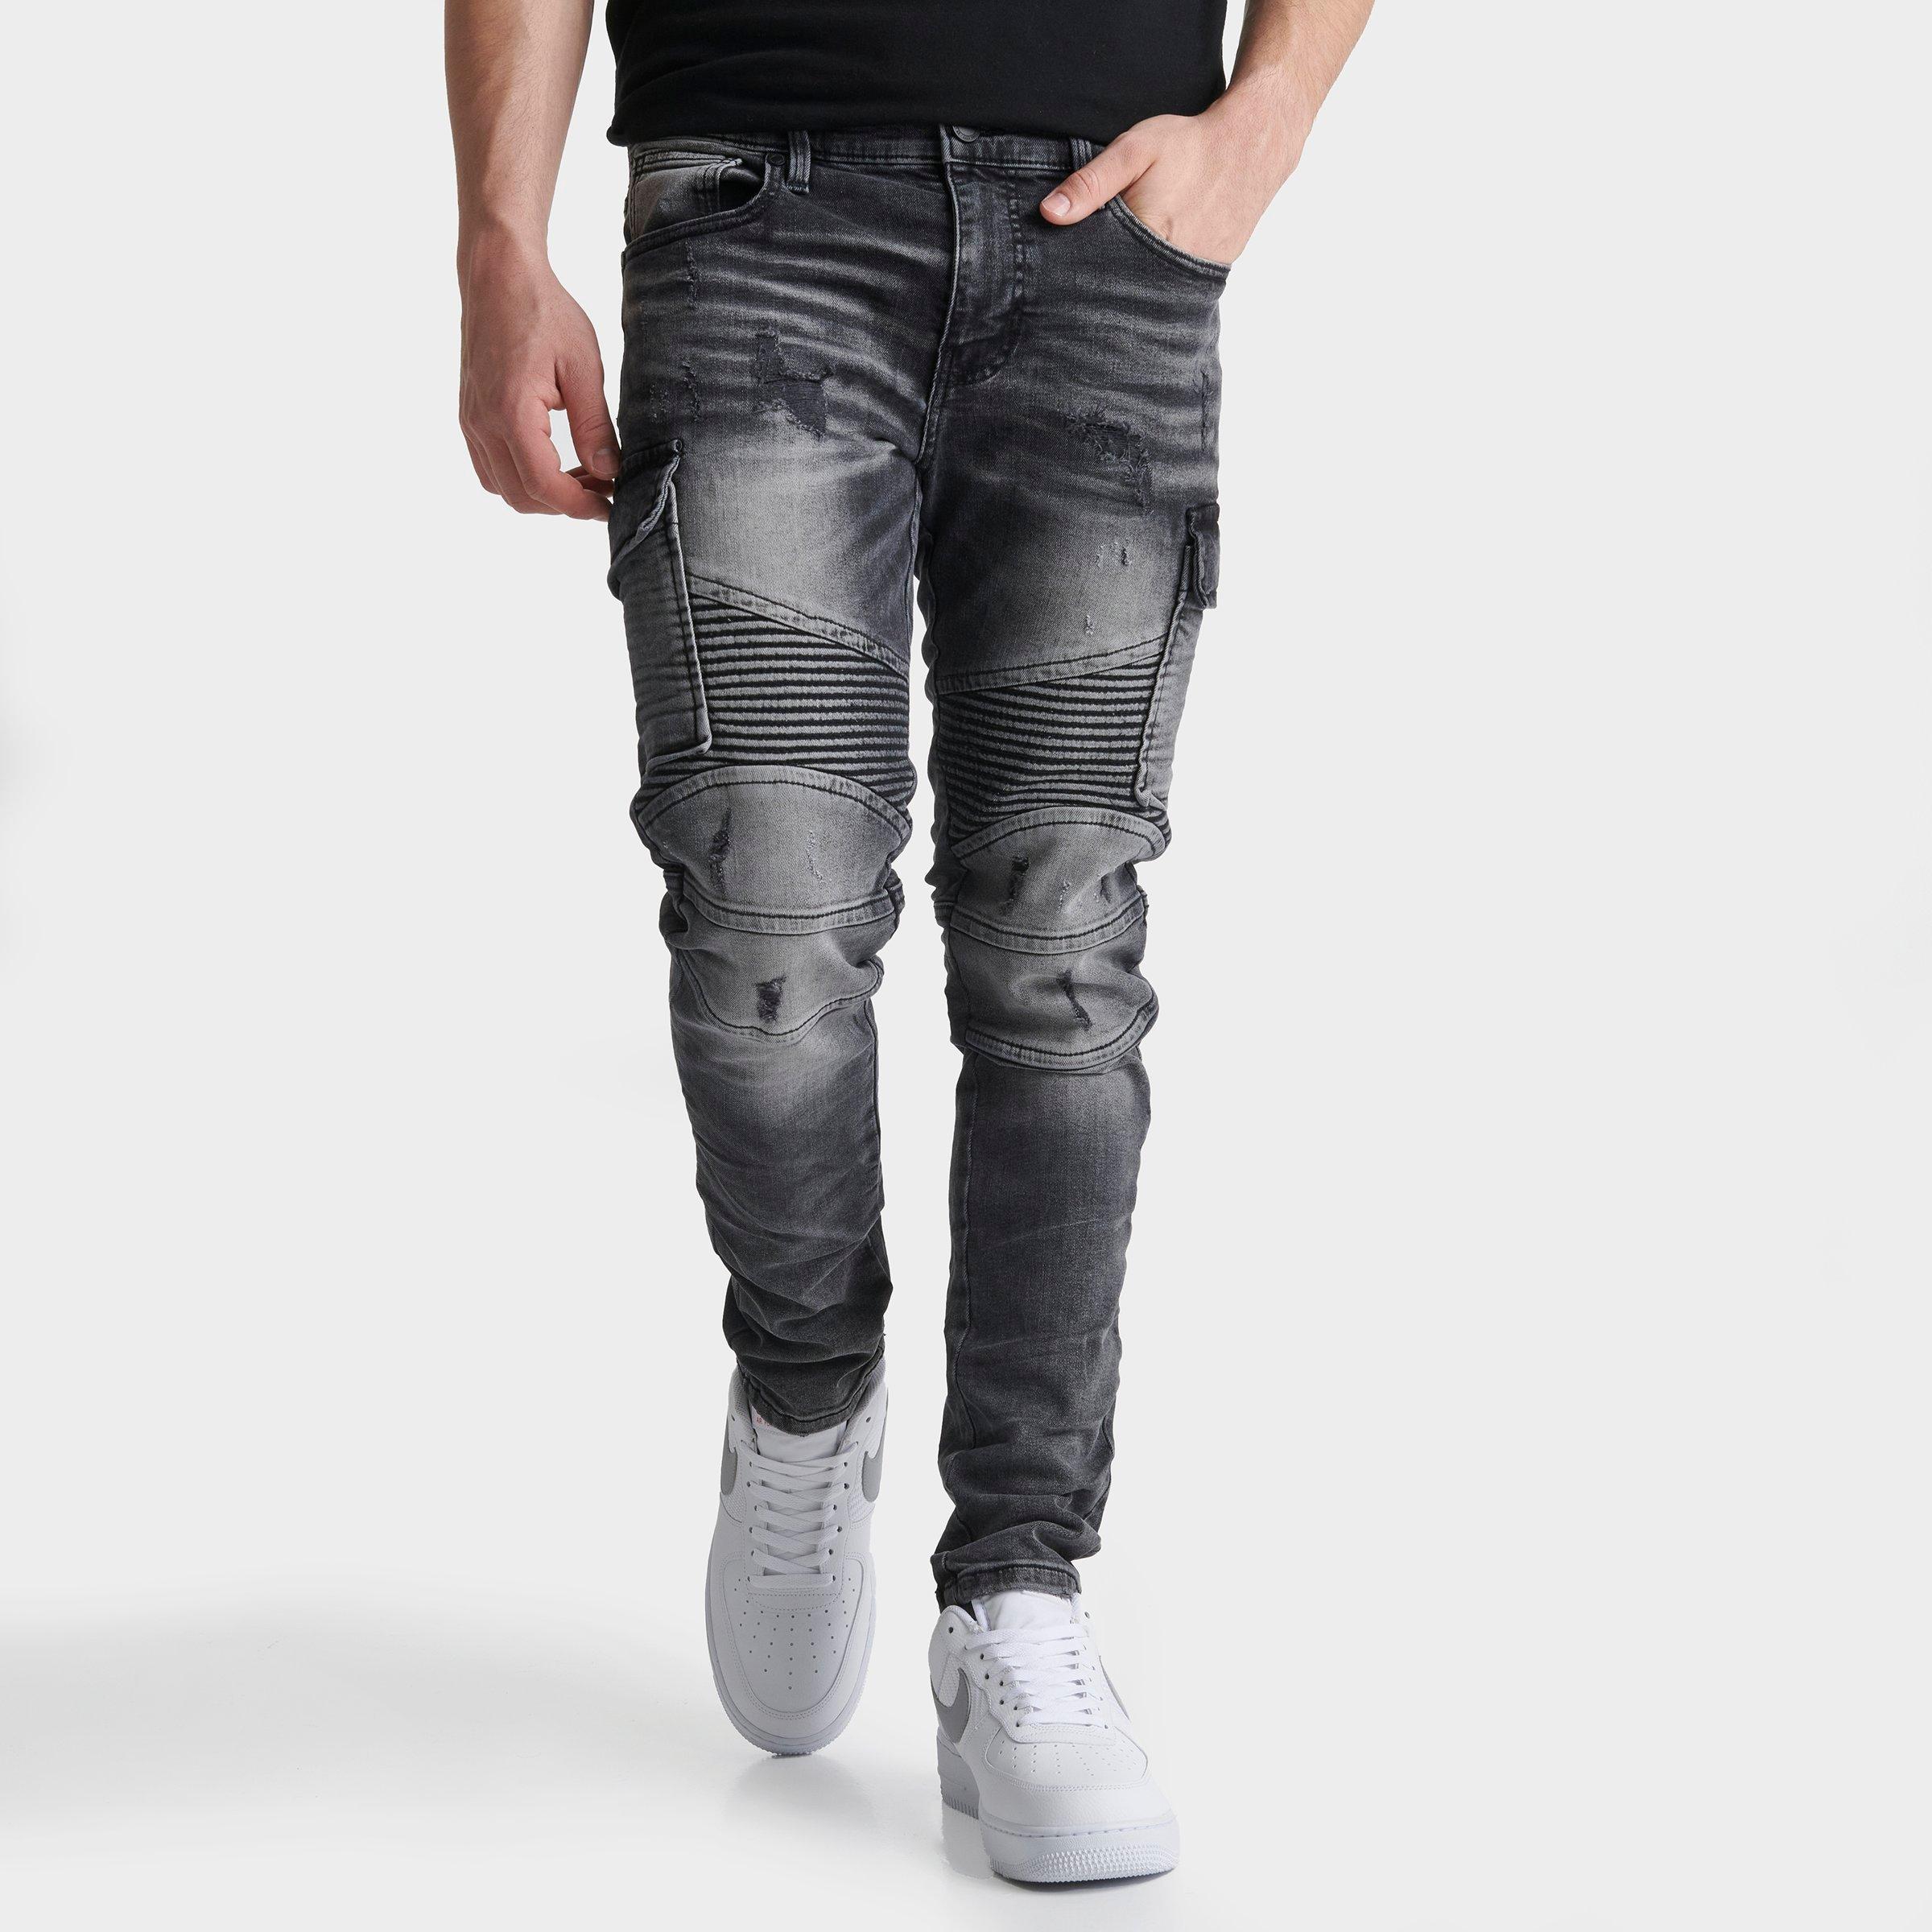 Isaac femte bundet Supply And Demand Men's Resort Jeans In Black/dark Grey | ModeSens